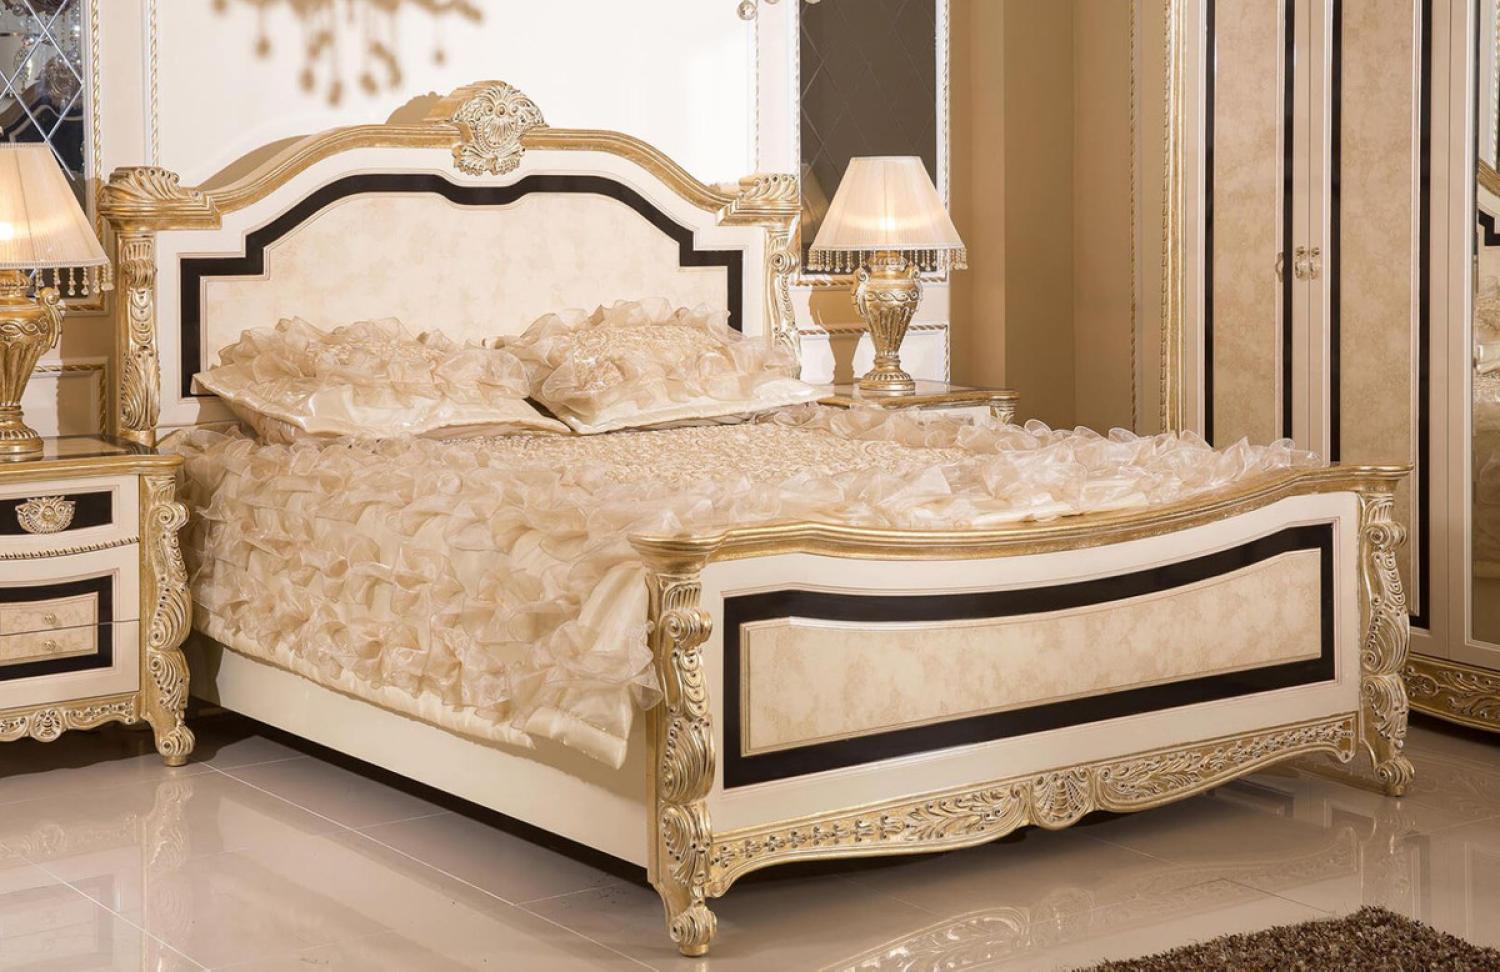 Casa Padrino Luxus Barock Doppelbett Weiß / Beige / Schwarz / Gold - Prunkvolles Barockstil Bett - Luxus Schlafzimmer Möbel im Barockstil - Barock Schlafzimmer Möbel - Barock Einrichtung Bild 1